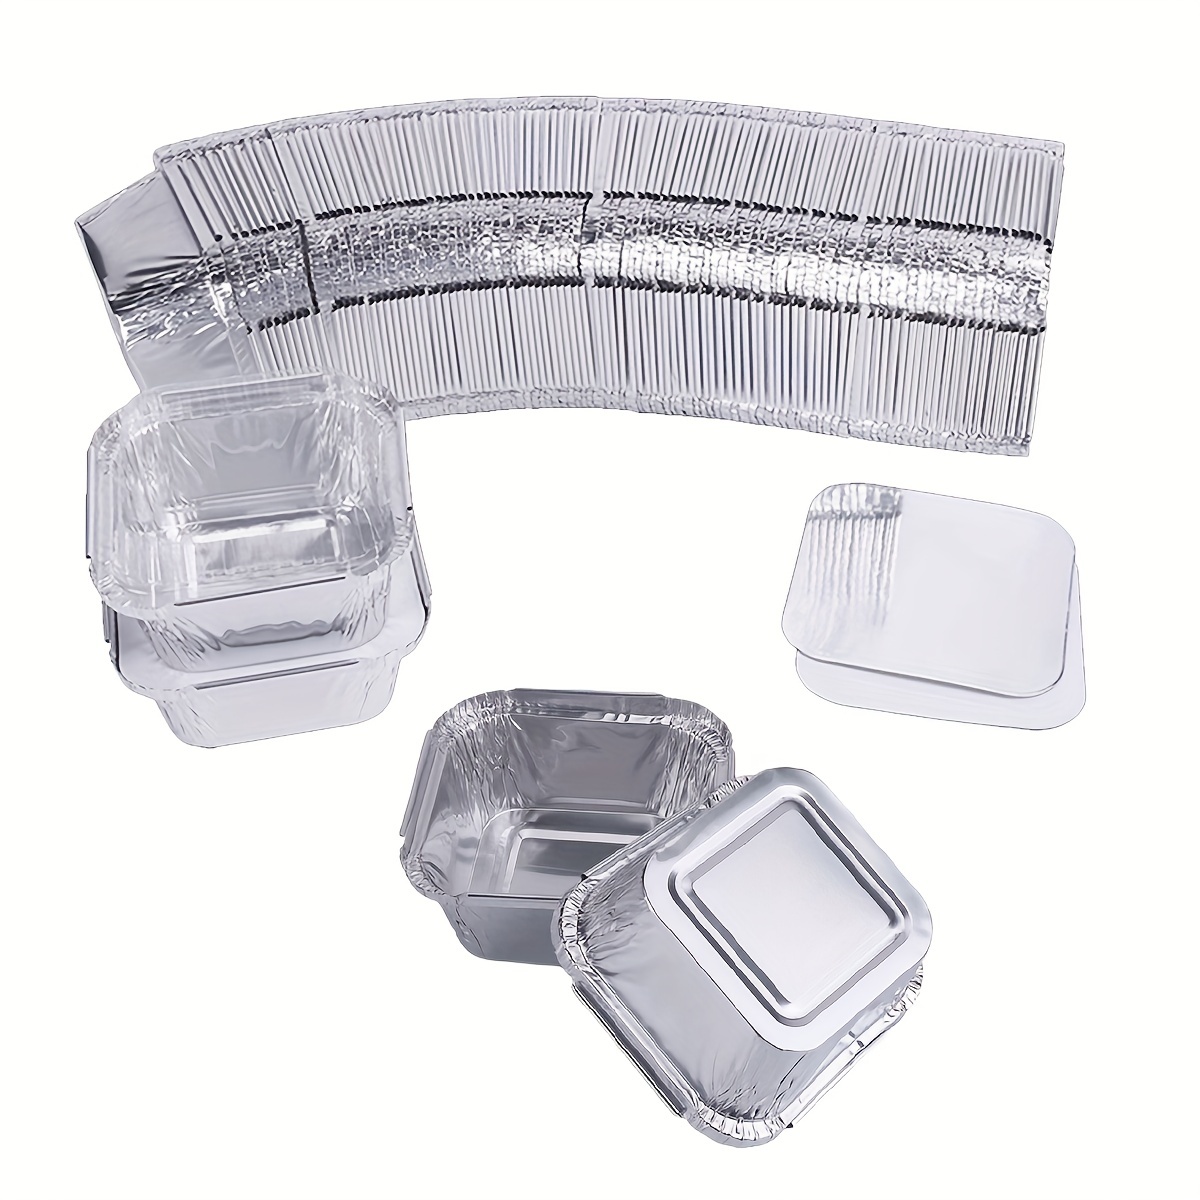 50pcs With Lids Mini Loaf Baking Pan Aluminum Foil Tins Liners 6.8oz 200ml  Flans